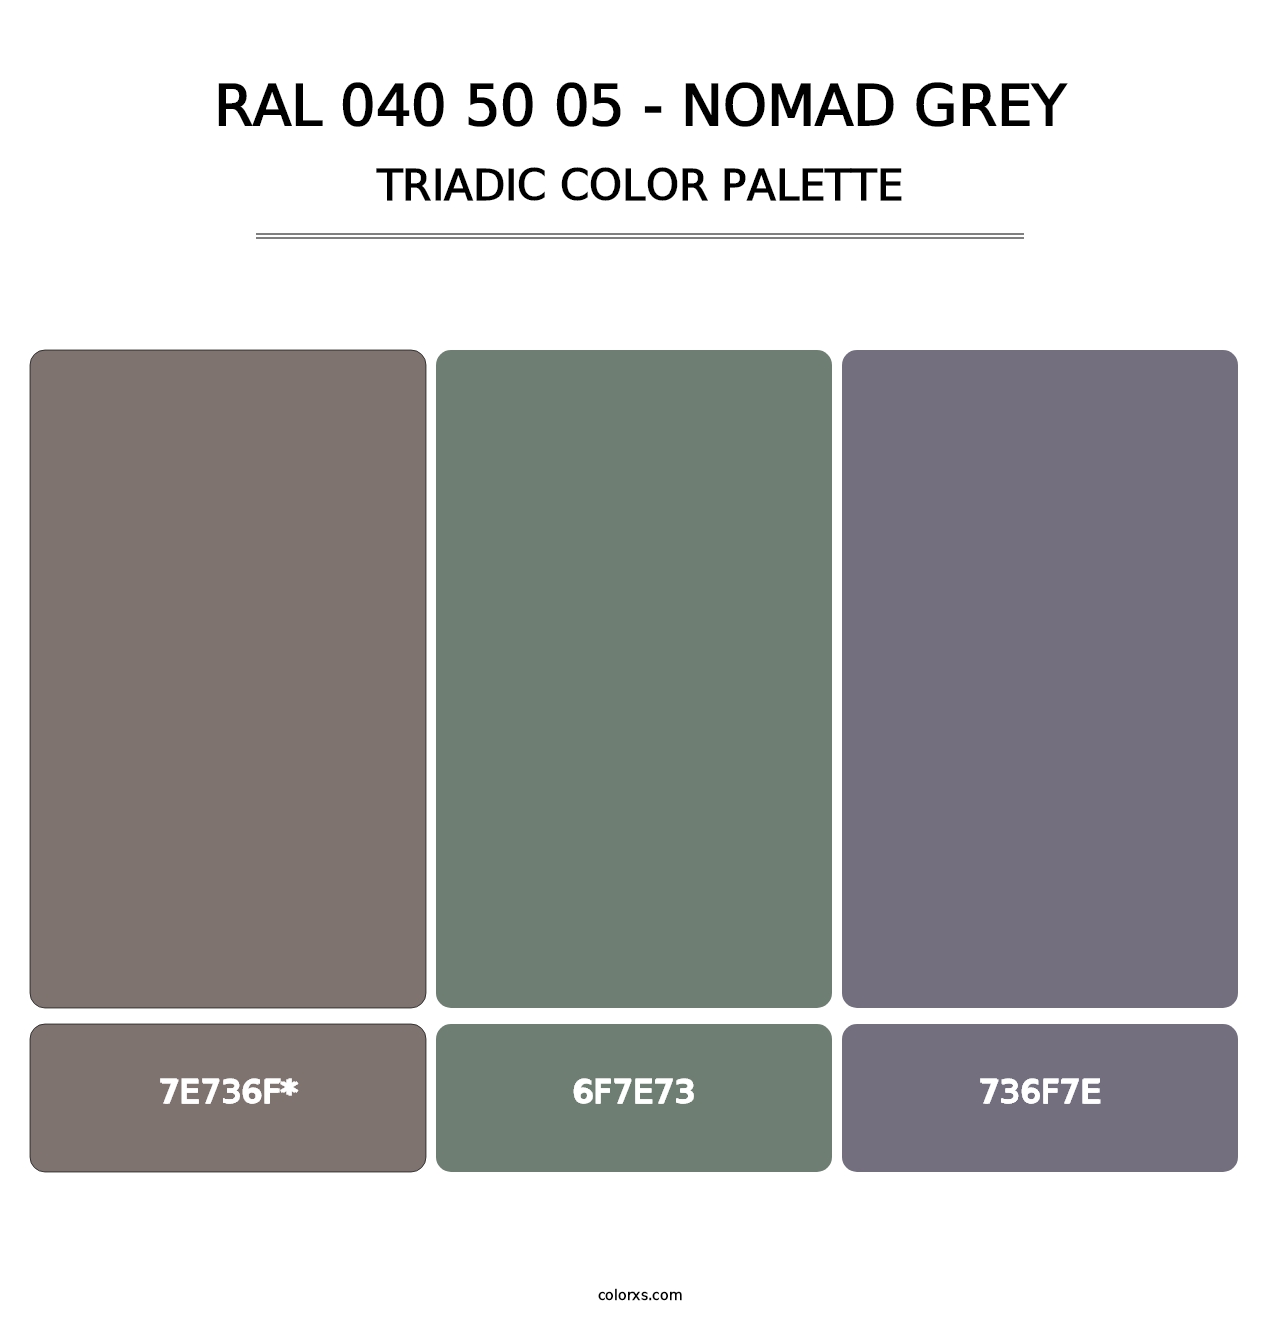 RAL 040 50 05 - Nomad Grey - Triadic Color Palette